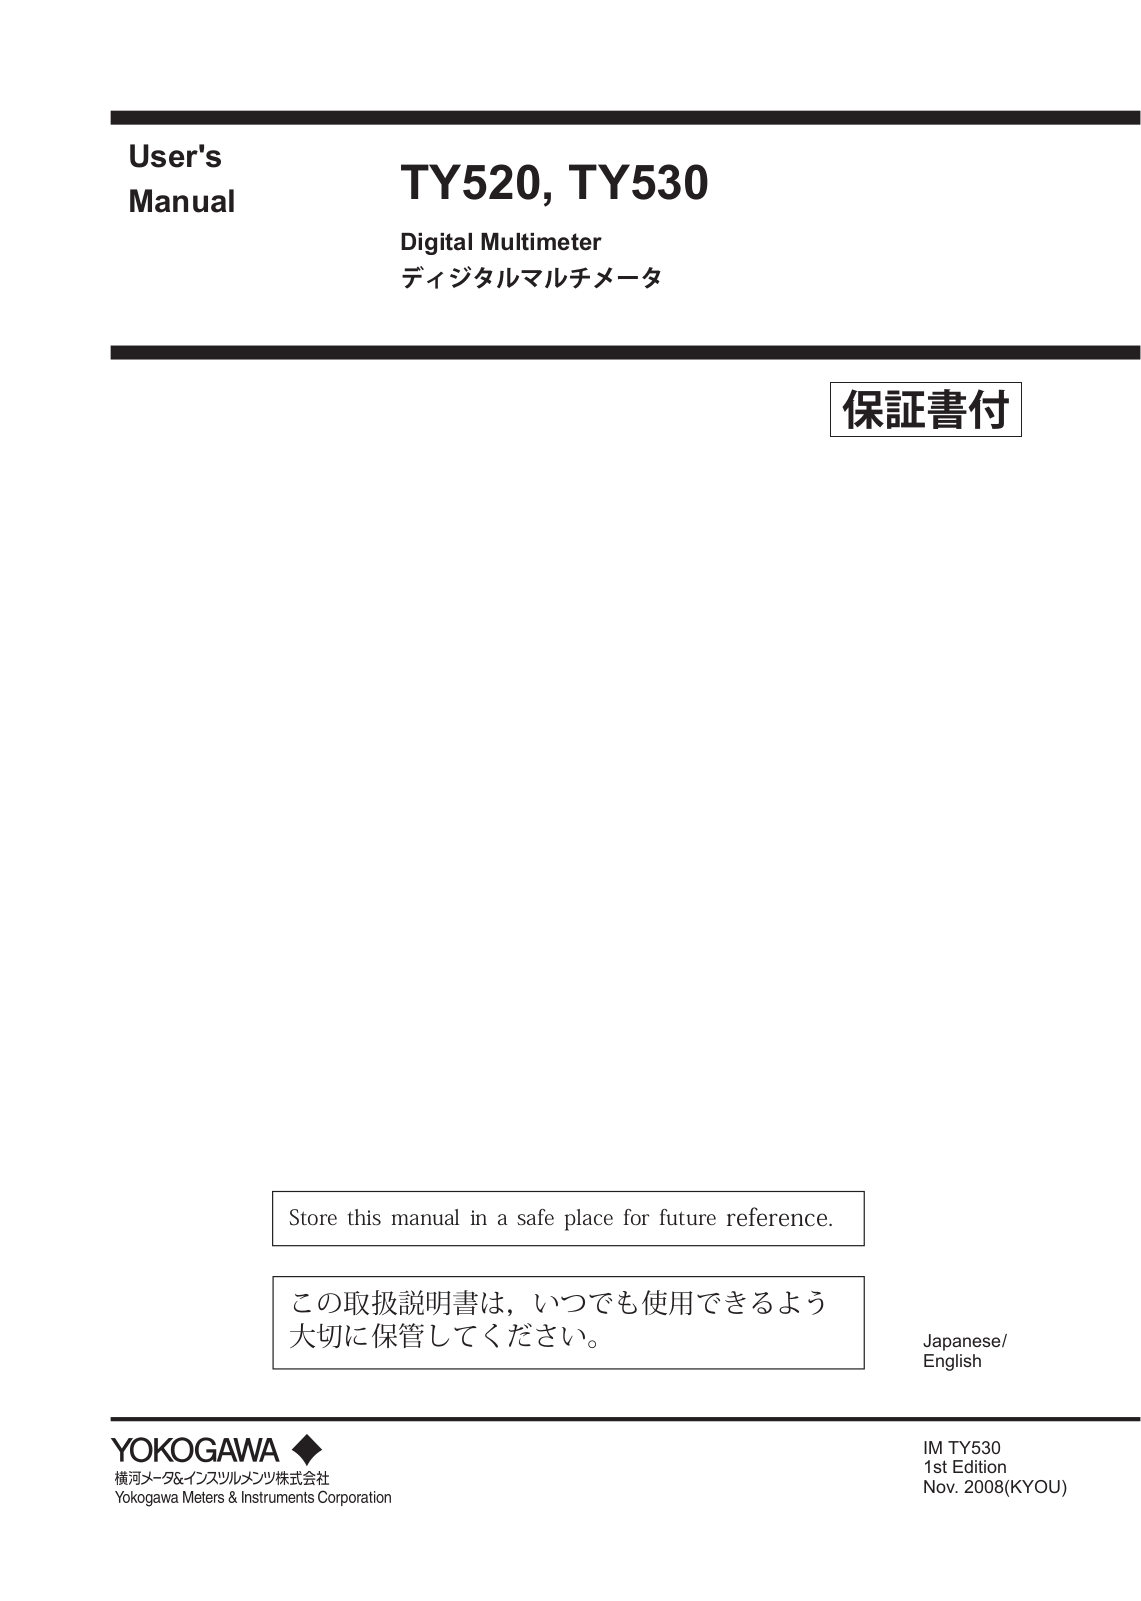 Yokogawa TY700 Operating Manual